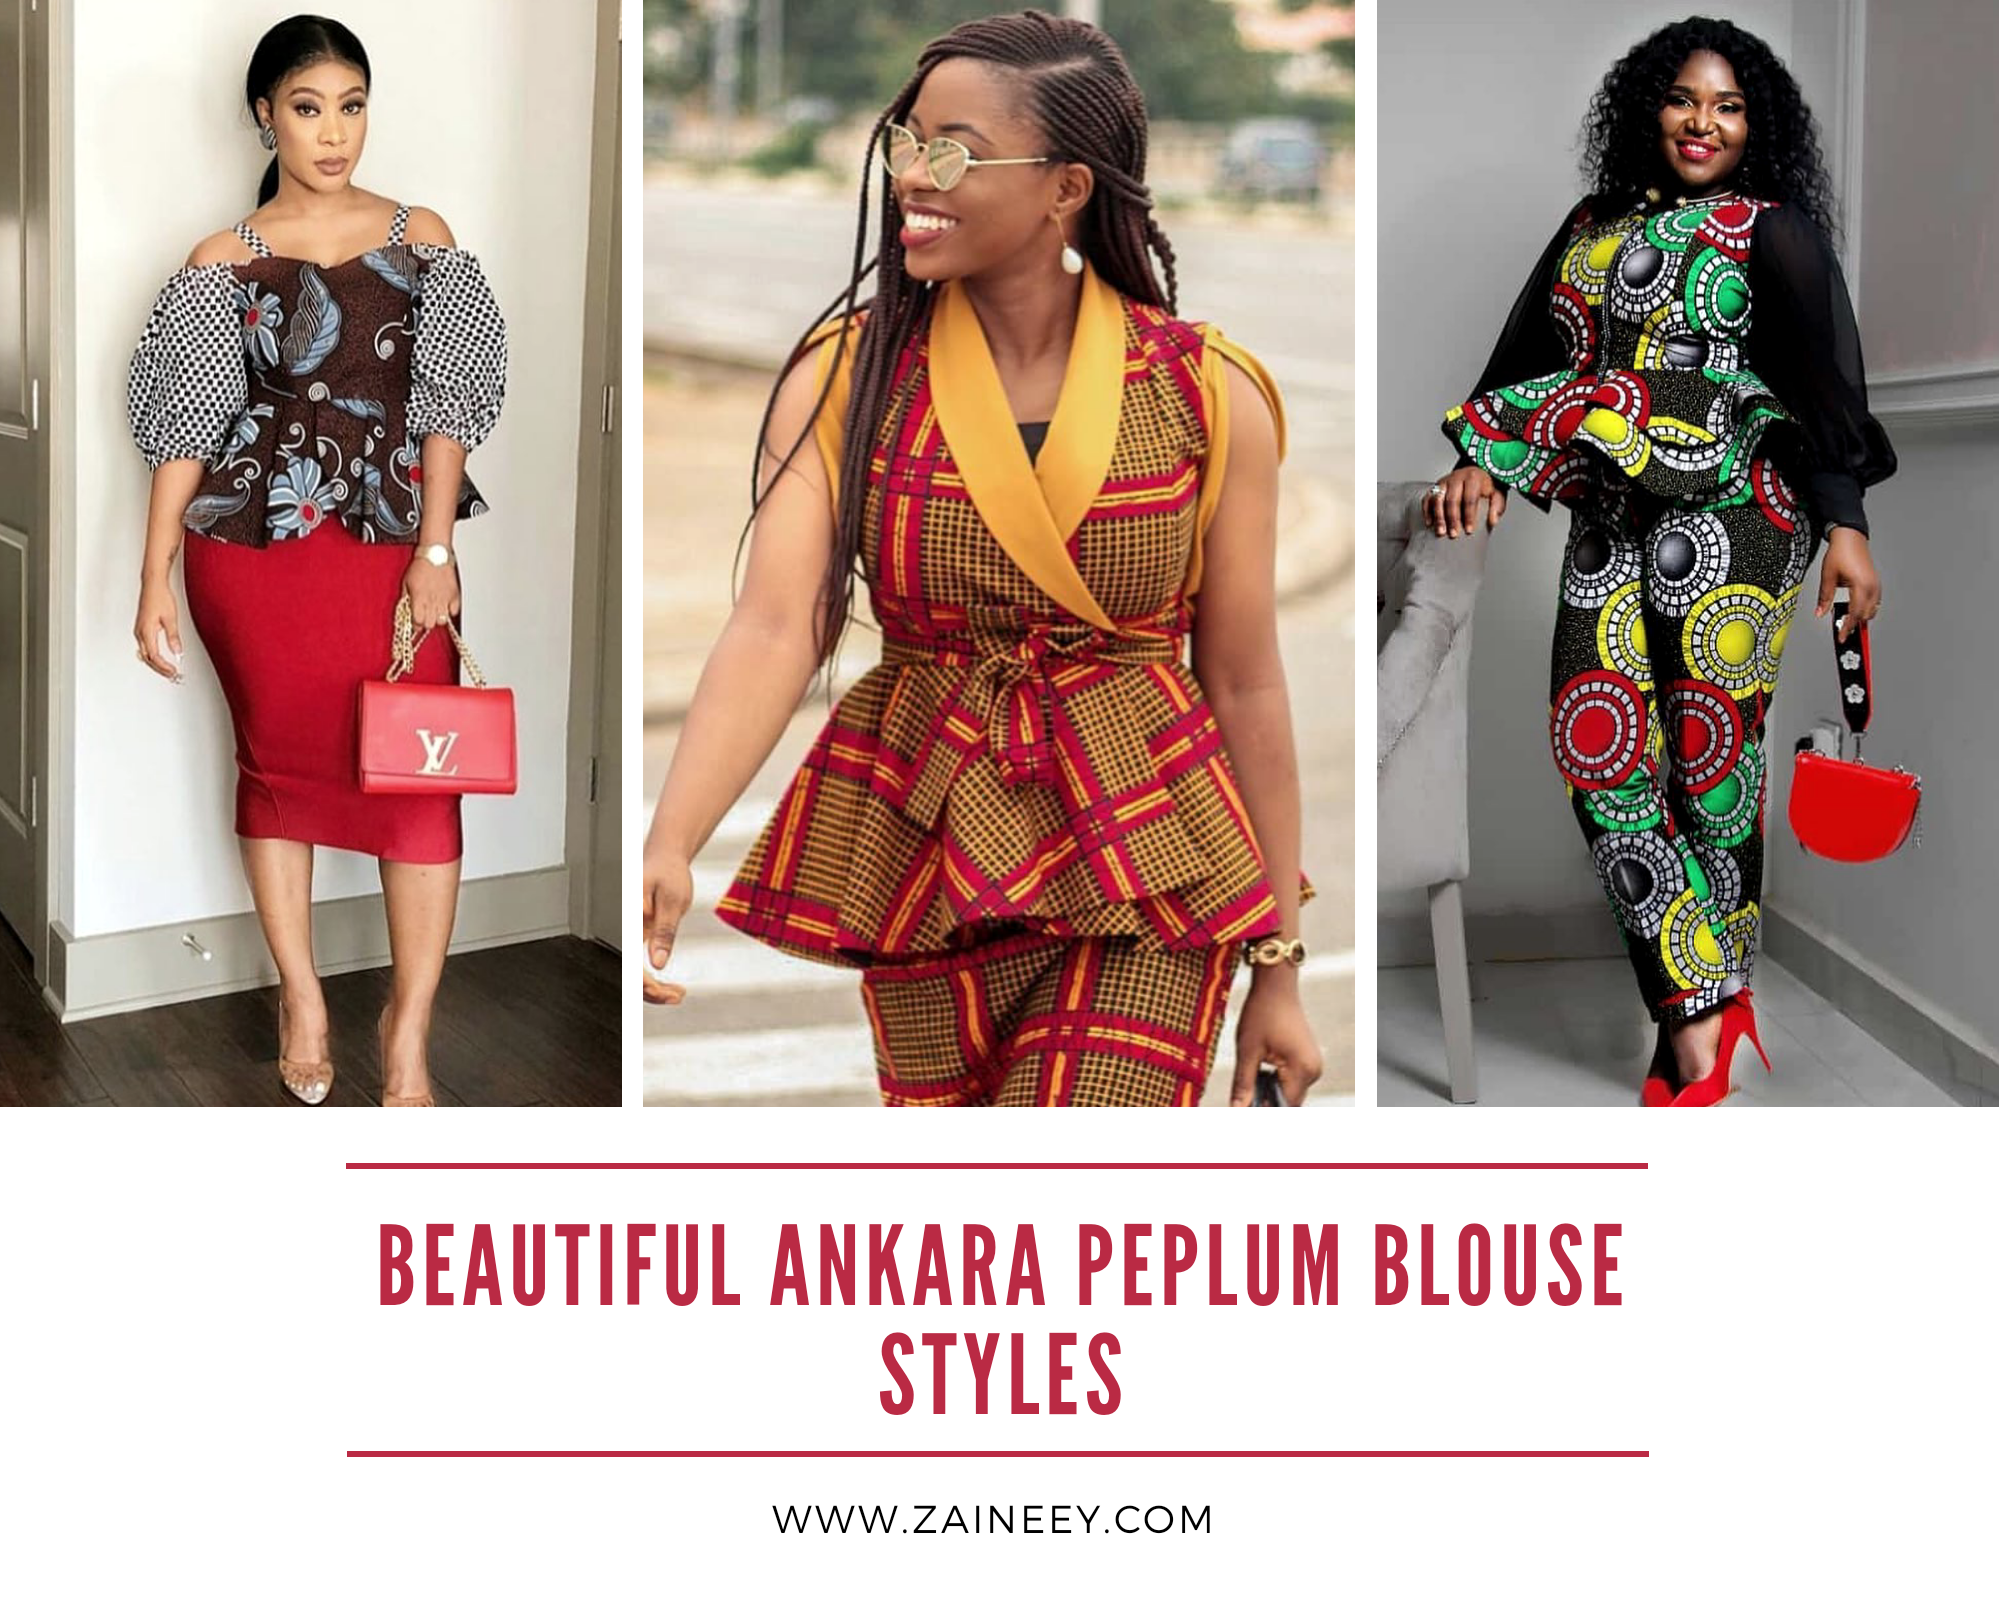 Unique, Elegant, and Beautiful Ankara Peplum Blouse styles for Christmas